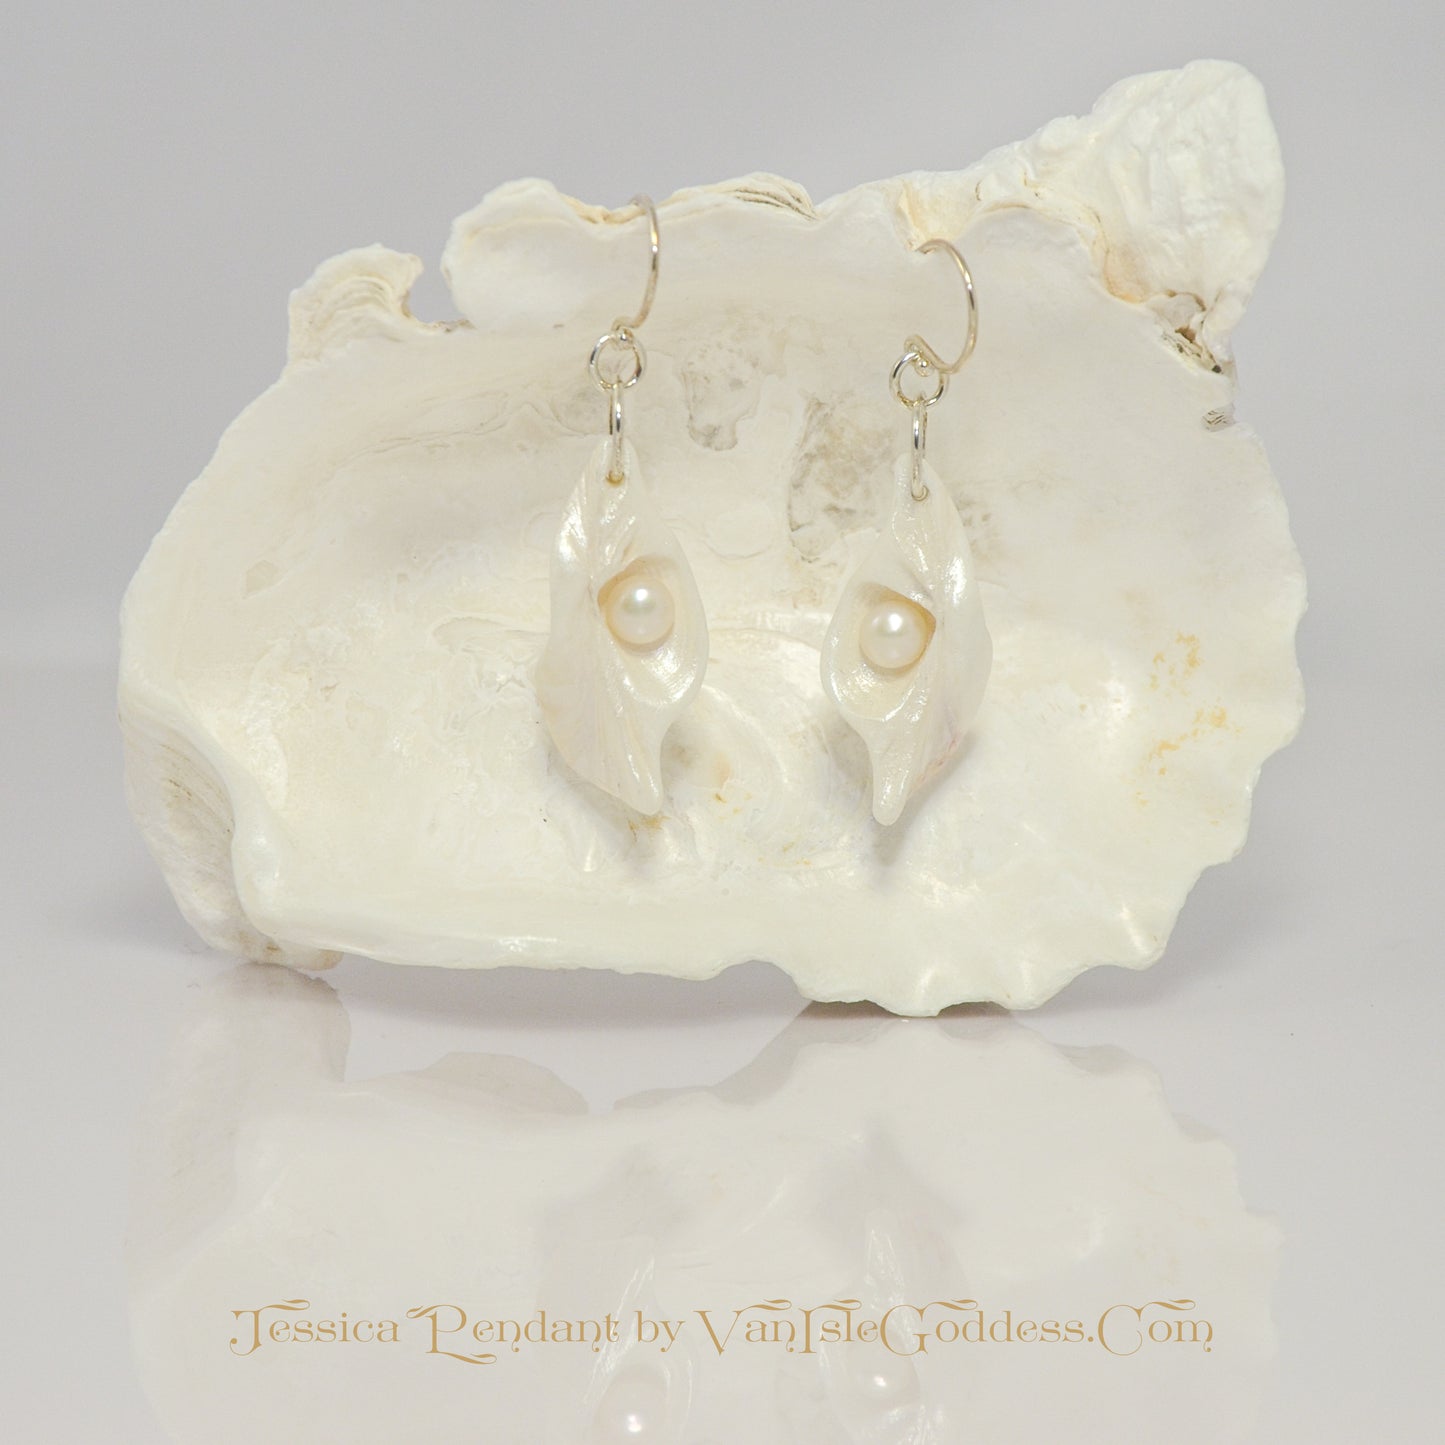 Jessica Freshwater Pearls Island Goddess Seashell Earrings